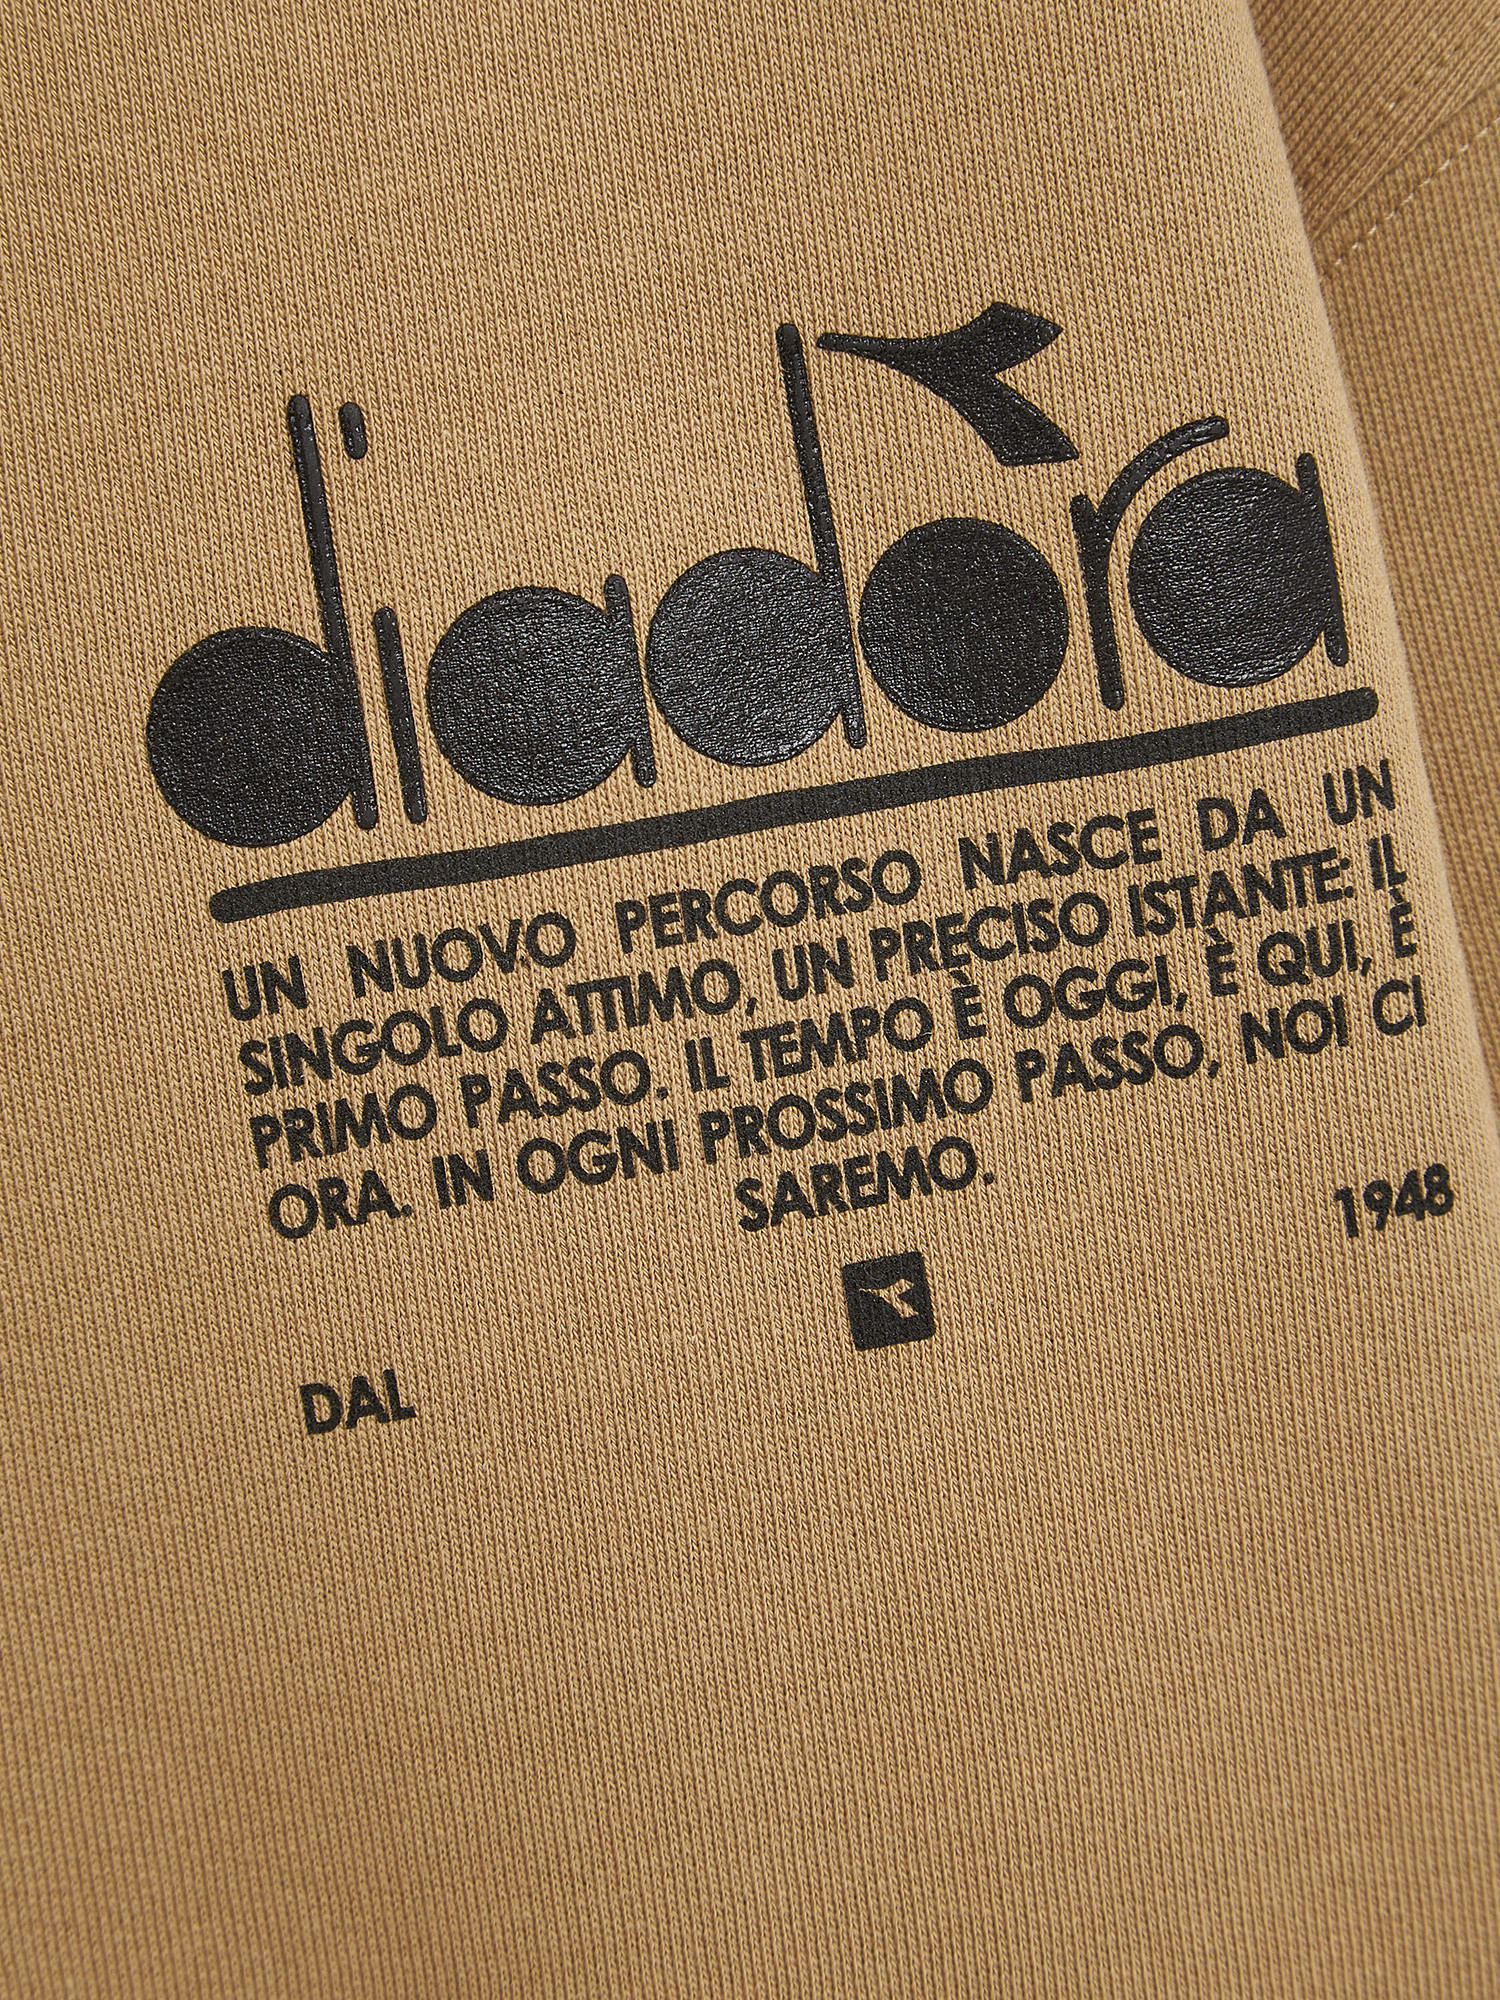 Diadora - Felpa girocollo manifesto in cotone, Beige, large image number 1